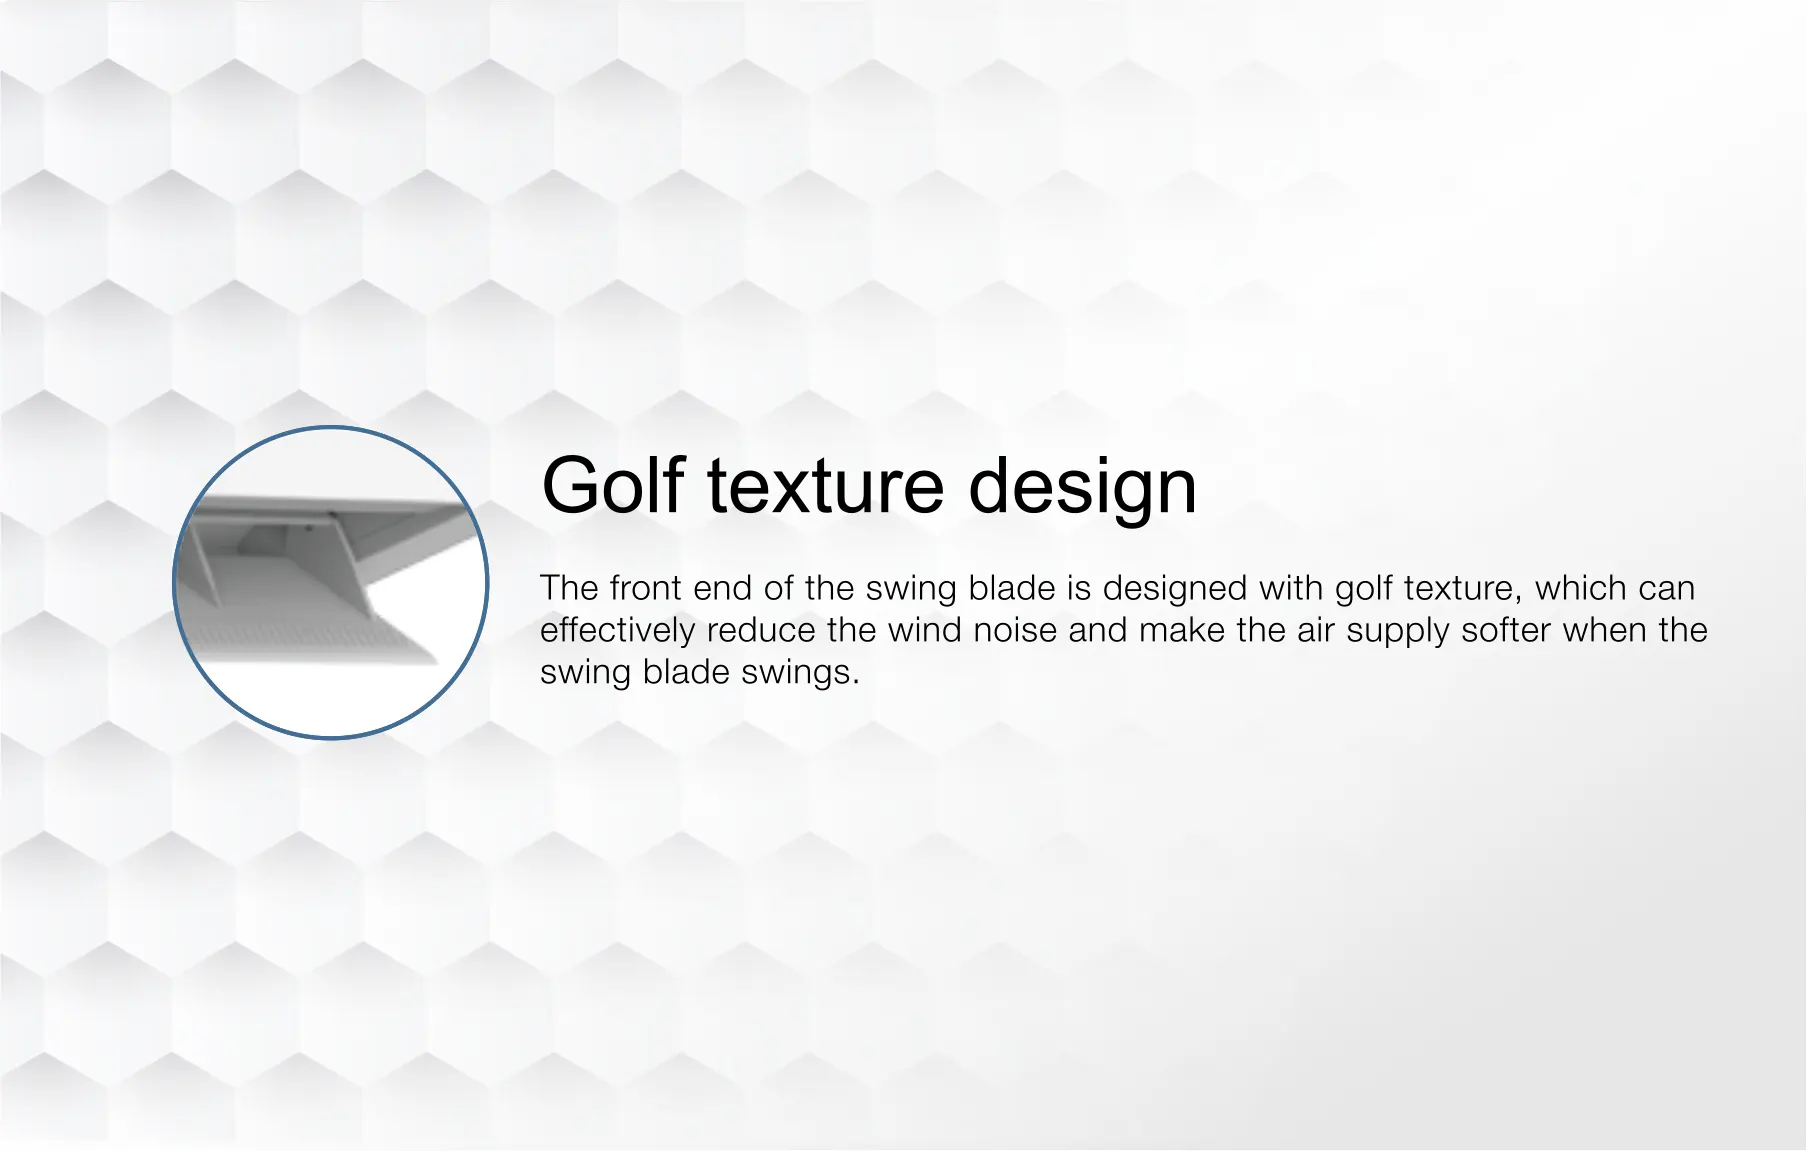 Suzuki air conditioner Golf series has texture design